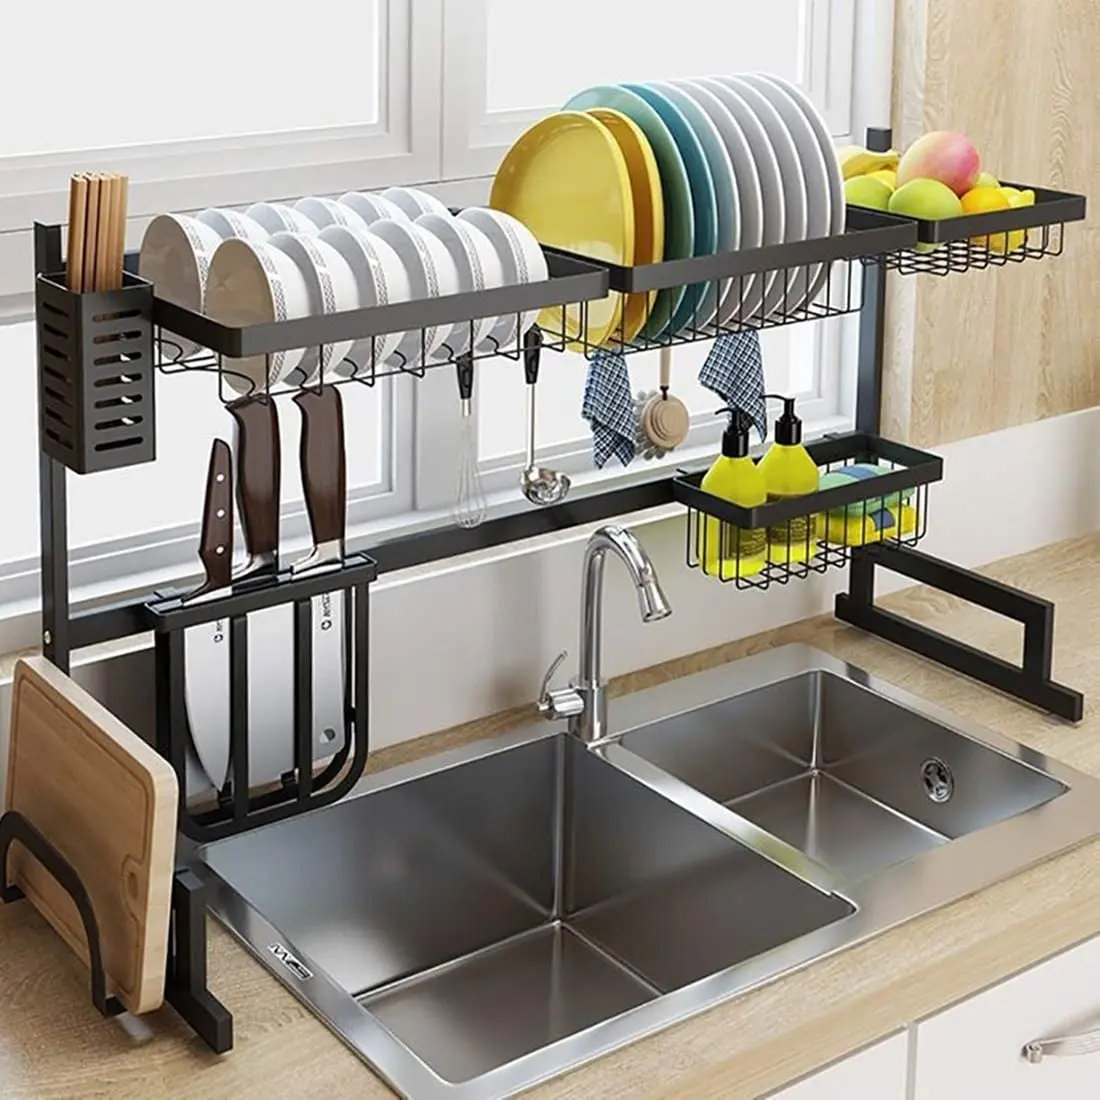 Details about   2Tier Adjustable Dish Rack Over The Sink Dish Drainer Dryer Kitchen Shelf Holder